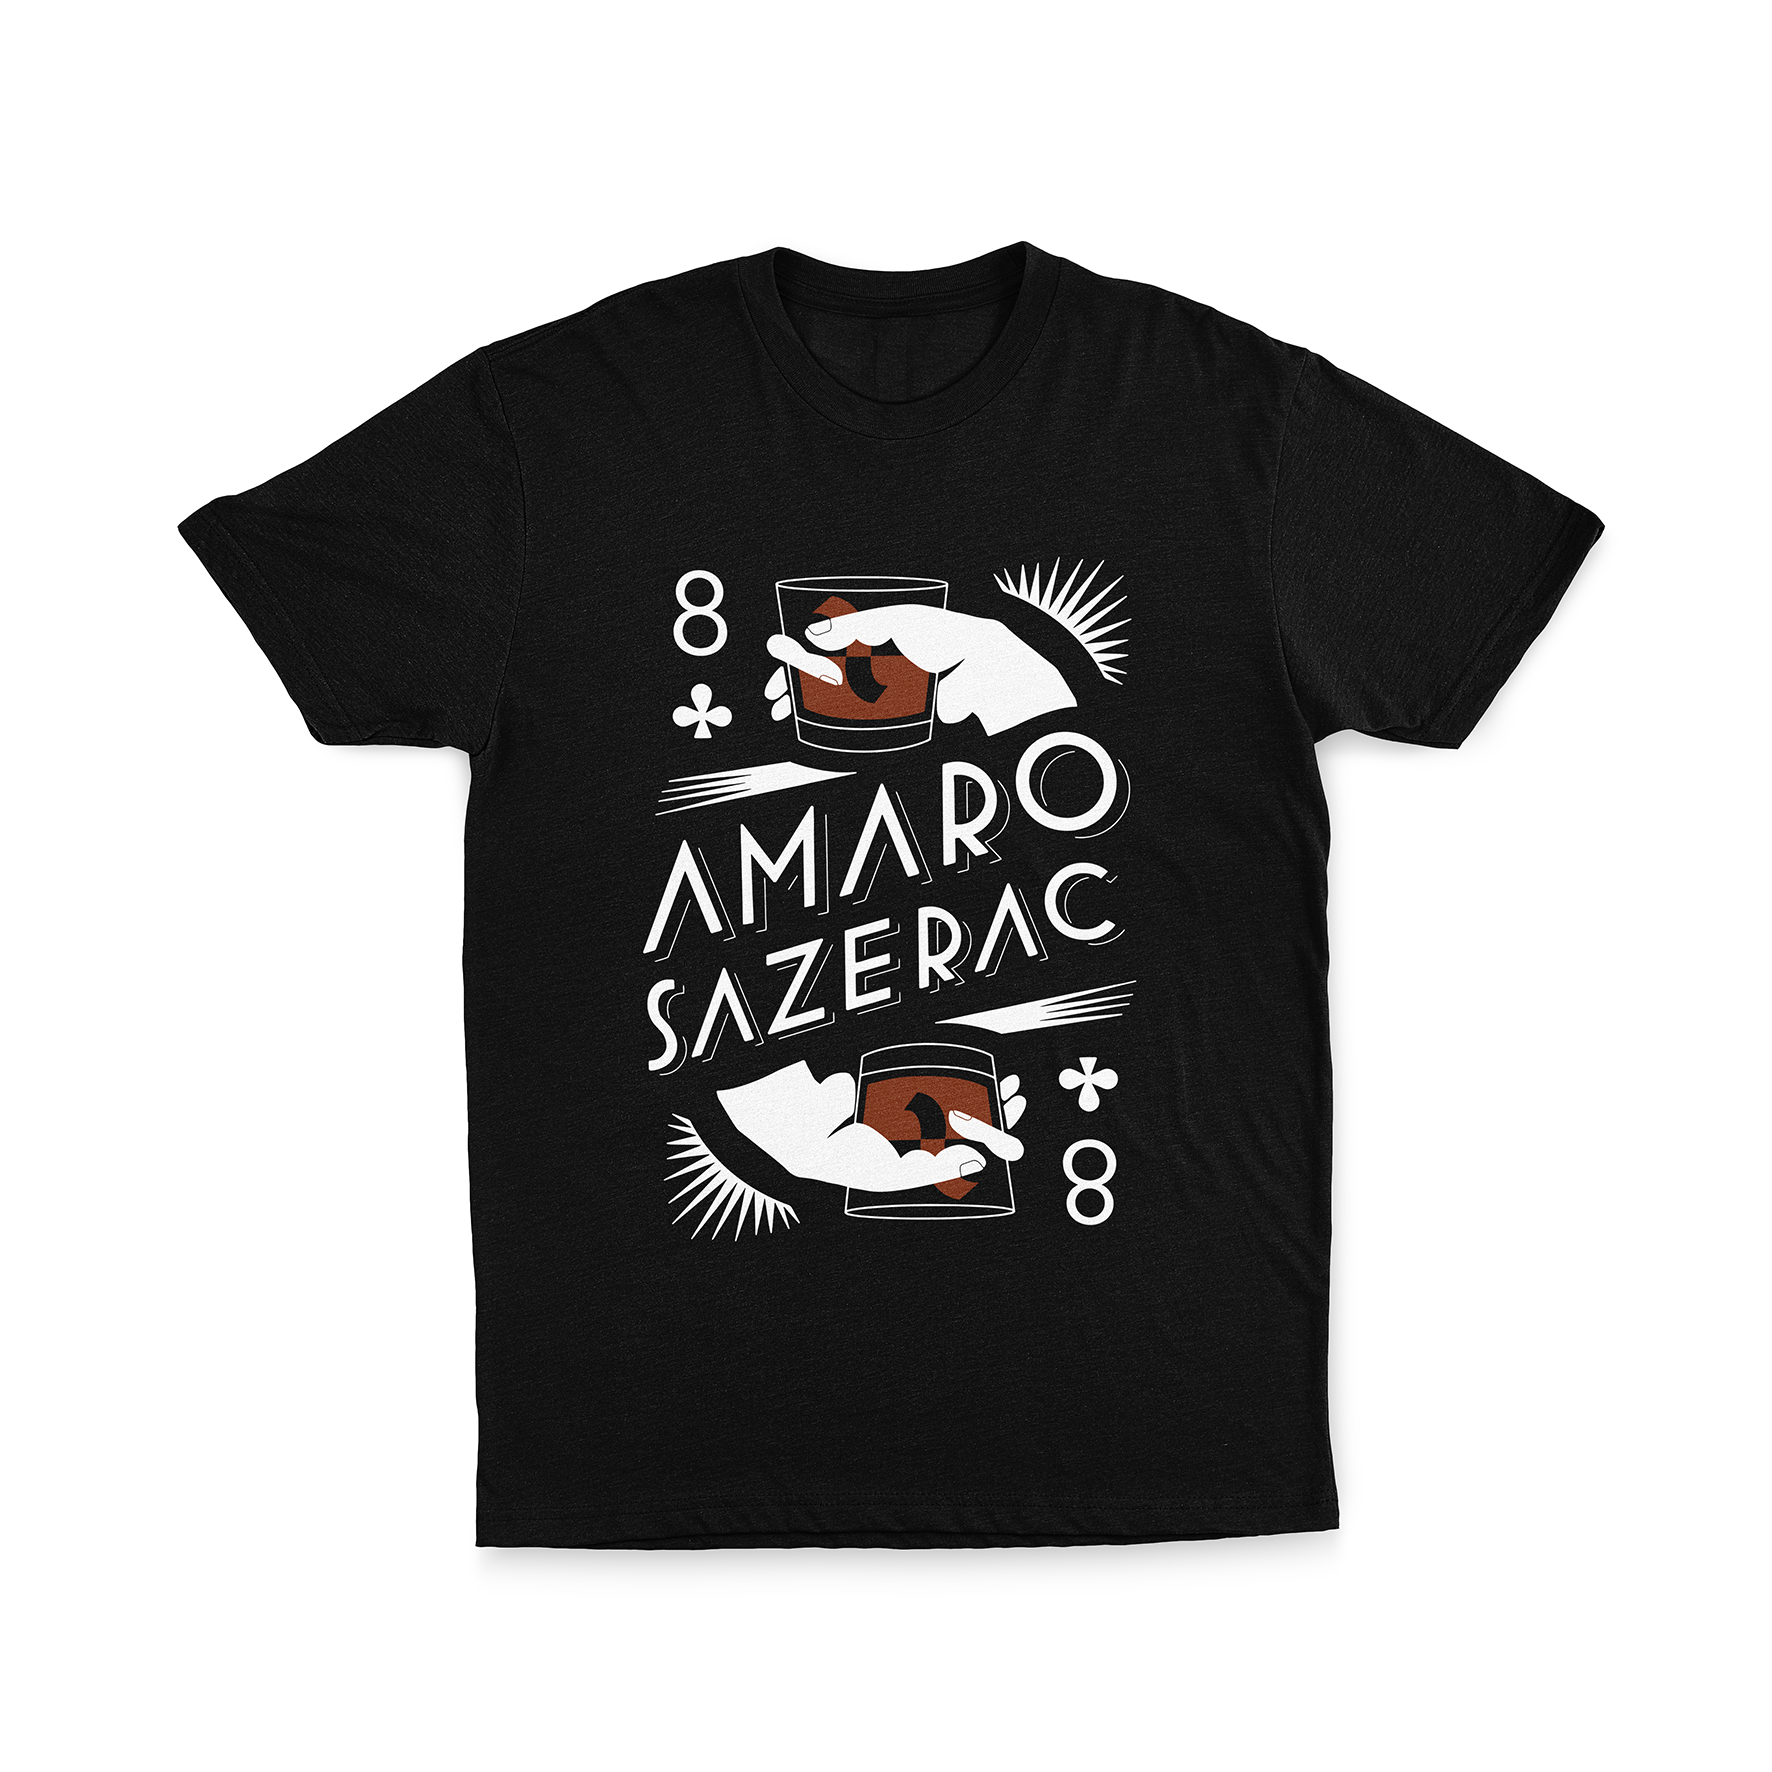 8 Amaro Sazerac T-Shirt